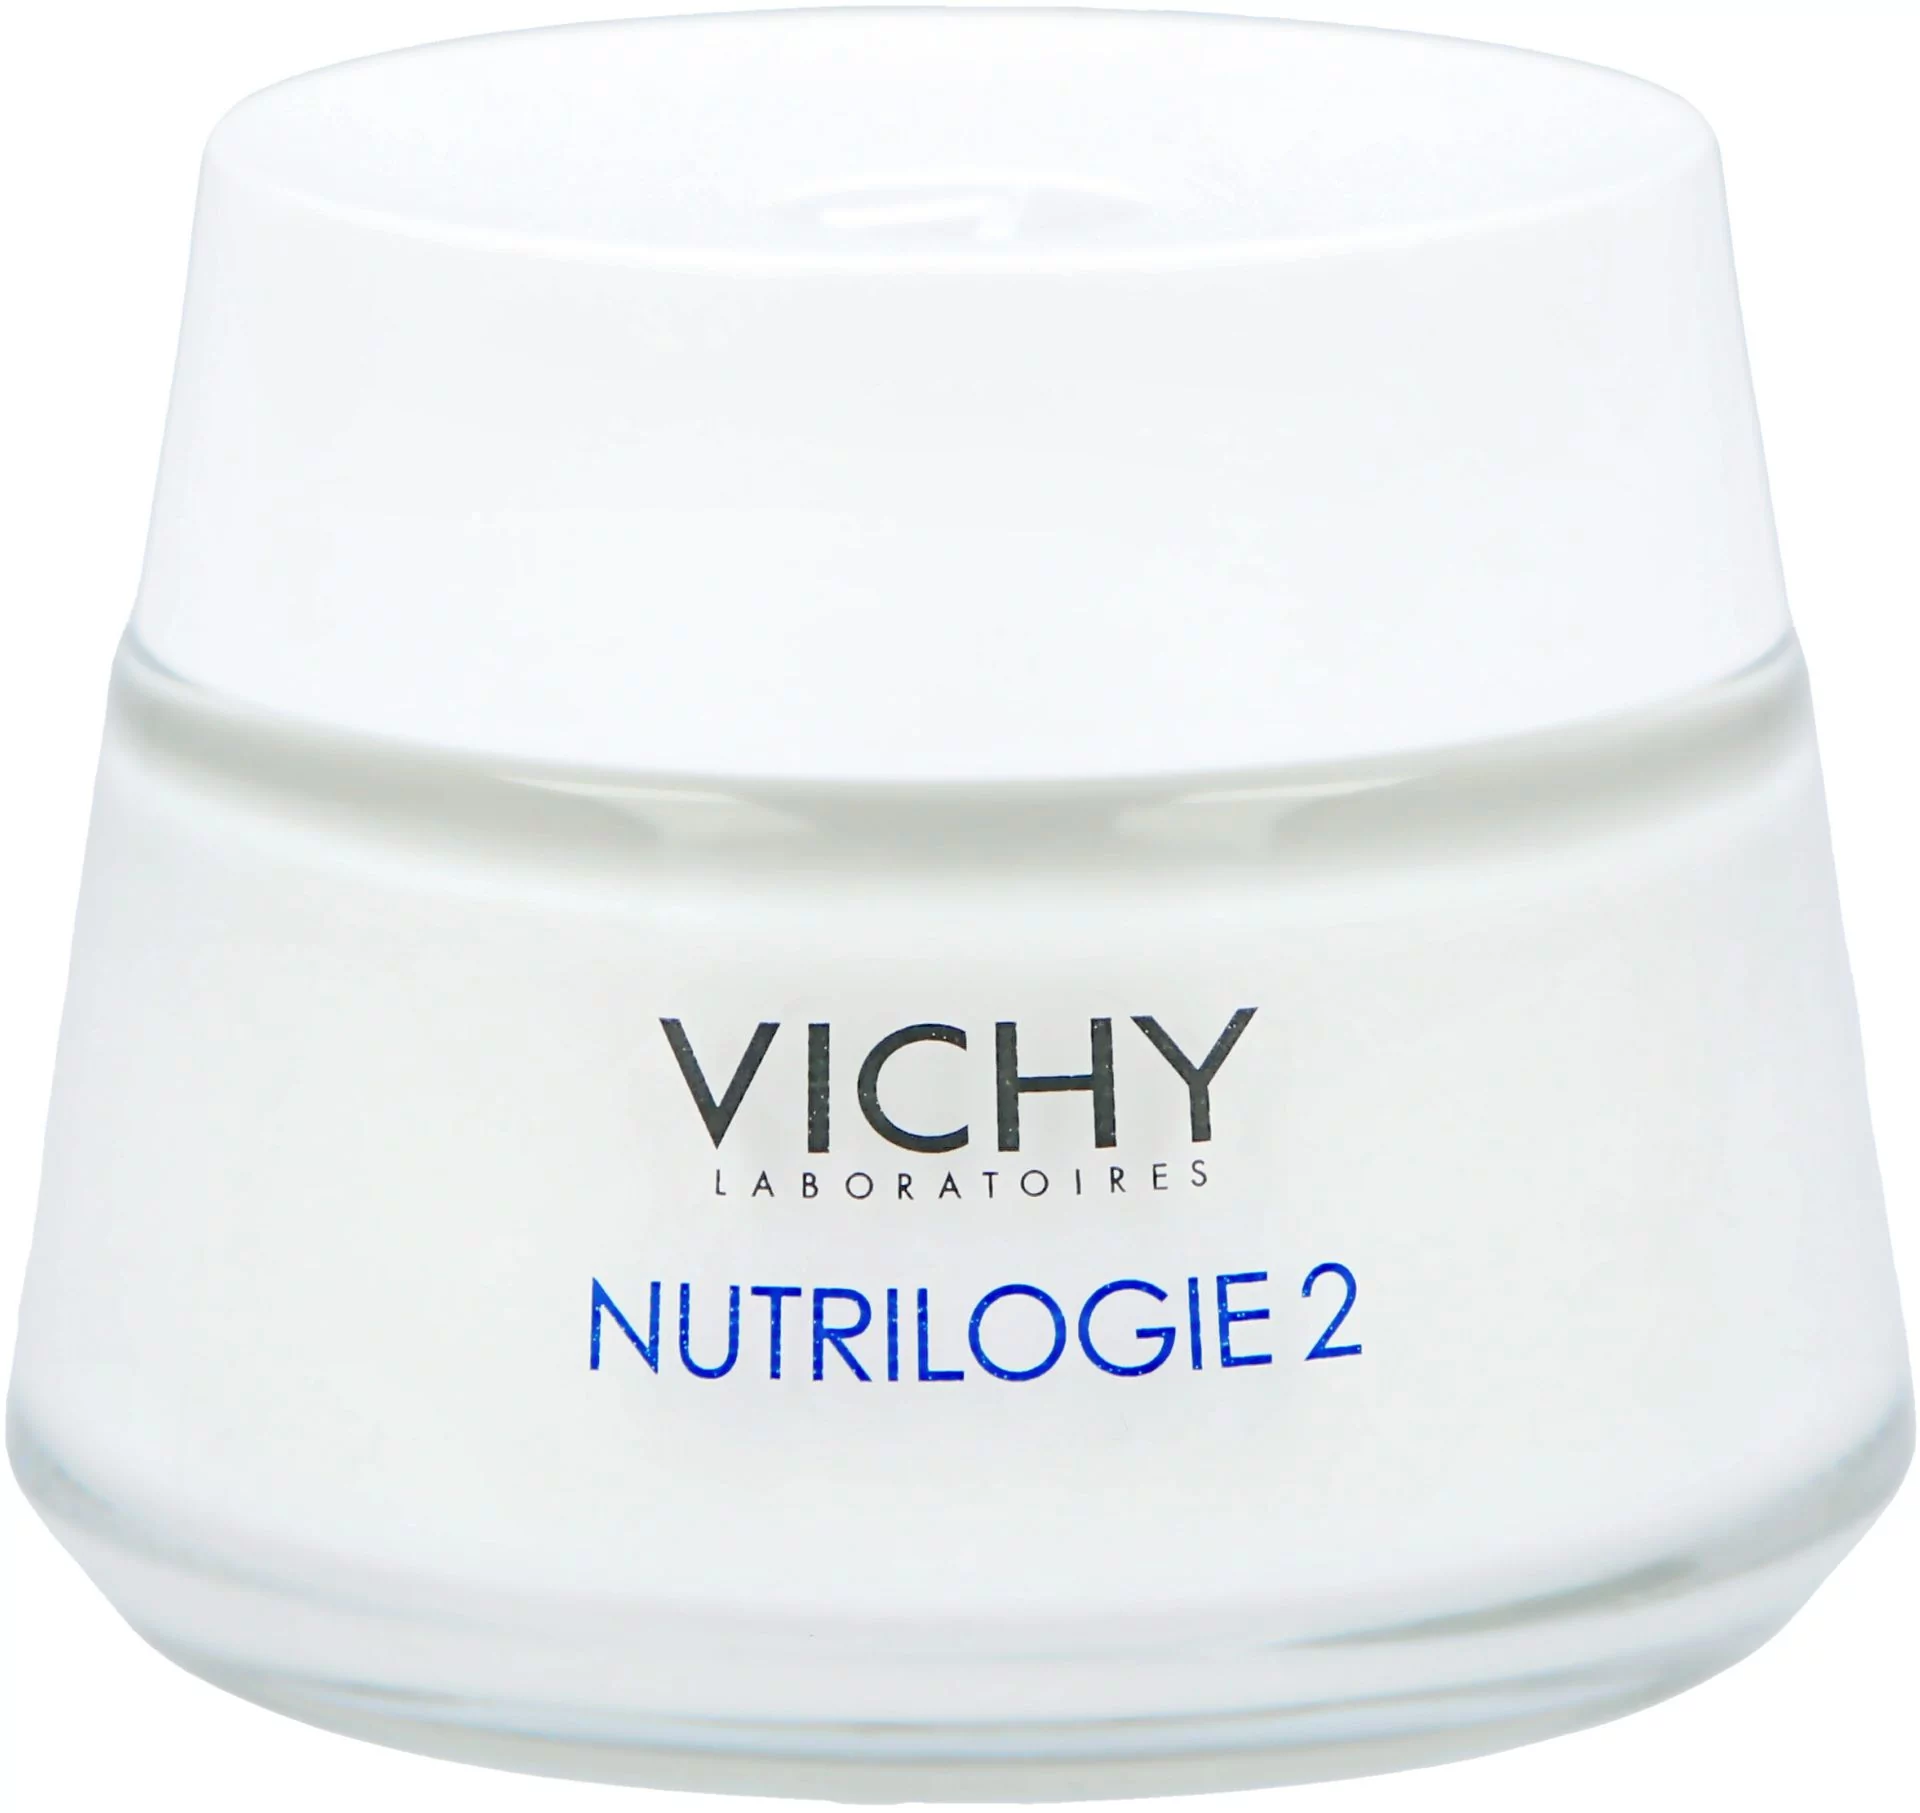 Vichy Intensywnie pielęgnujący krem do skóry bardzo suchej - Nutrilogie 2 Intensive for Dry Skin Intensywnie pielęgnujący krem do skóry bardzo suchej - Nutrilogie 2 Intensive for Dry Skin